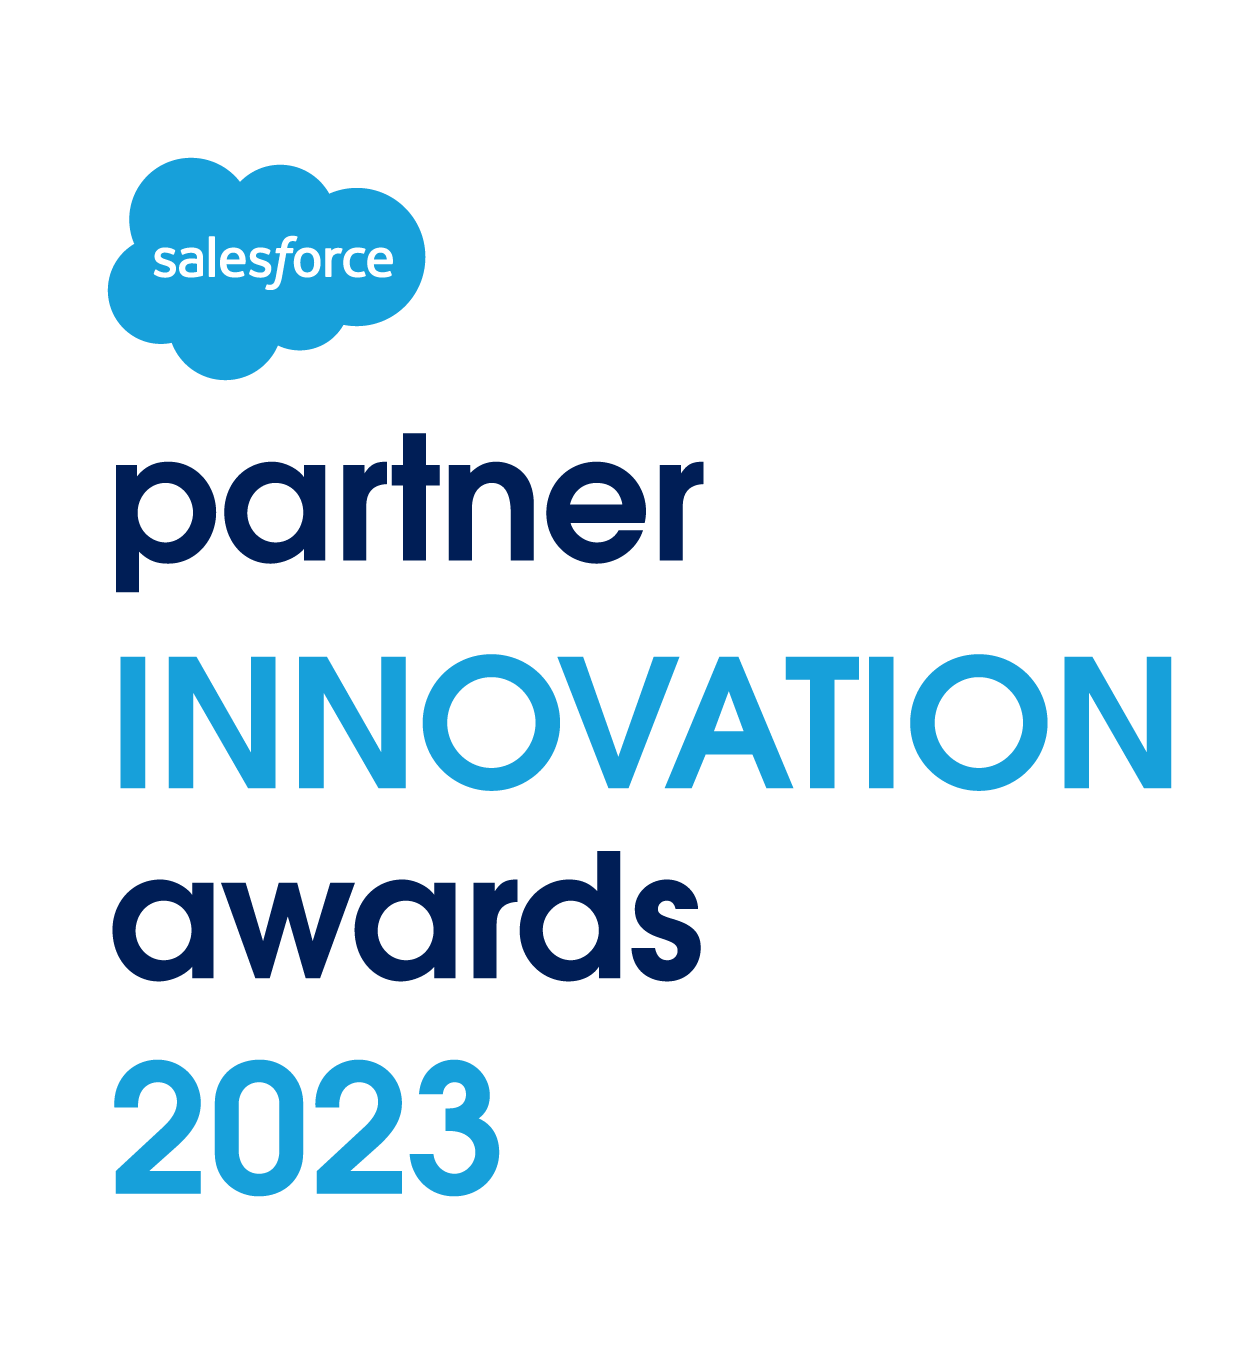 Salesforce Partner Innovation Awards 2023 Logo